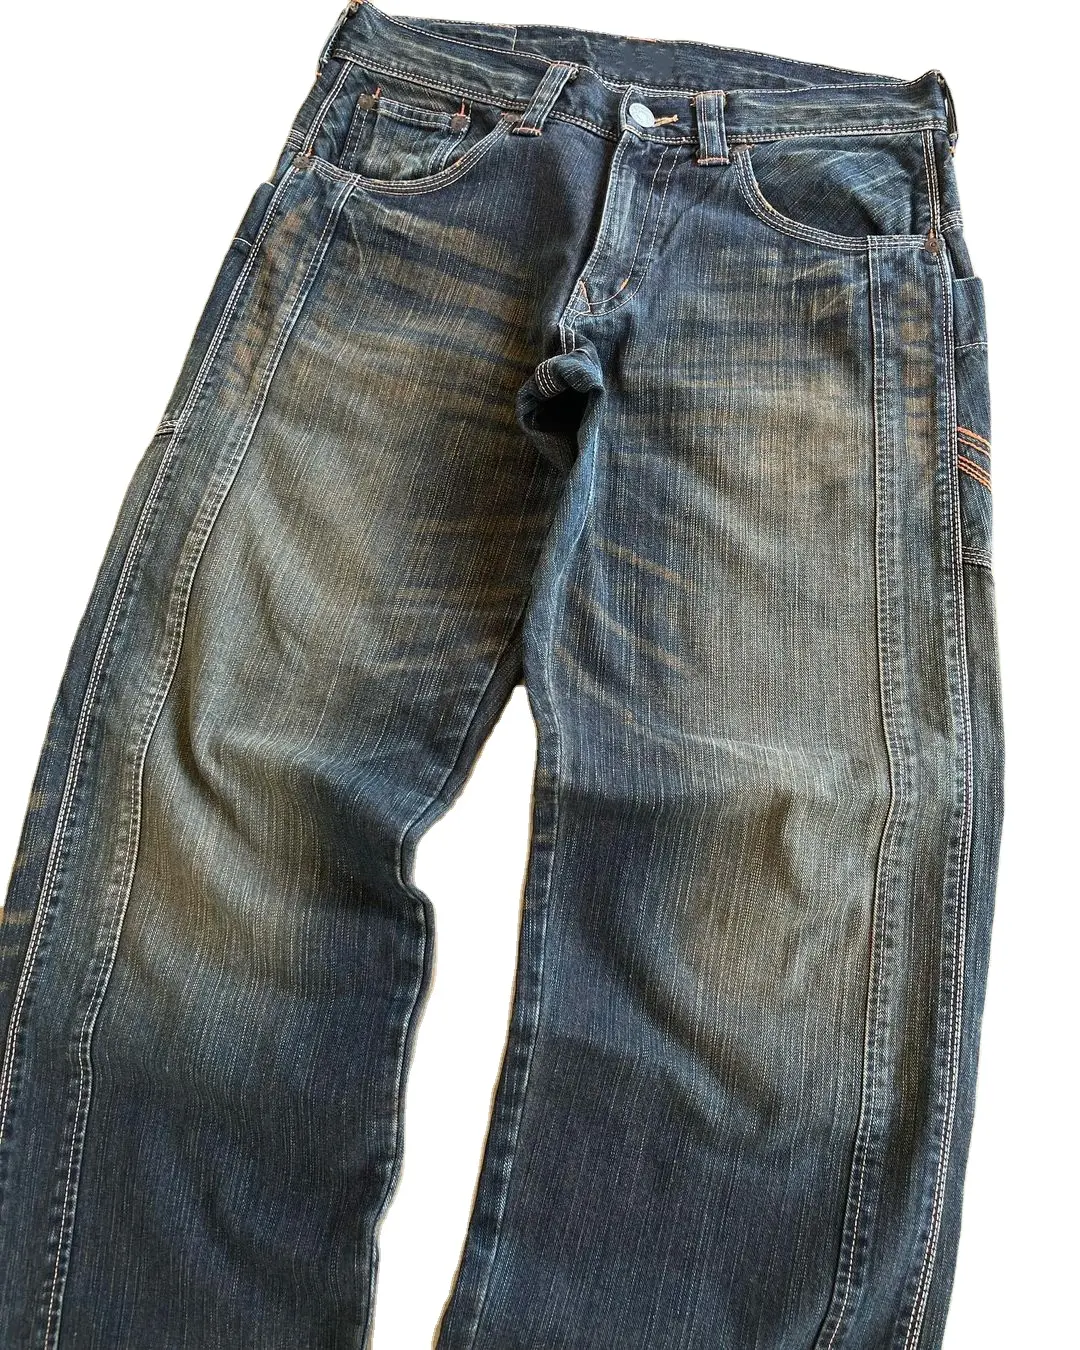 zhuoyang garment Custom High quality vintage wash cotton distressed raw indigo Japanese selvedge jeans fabric selvedge denim